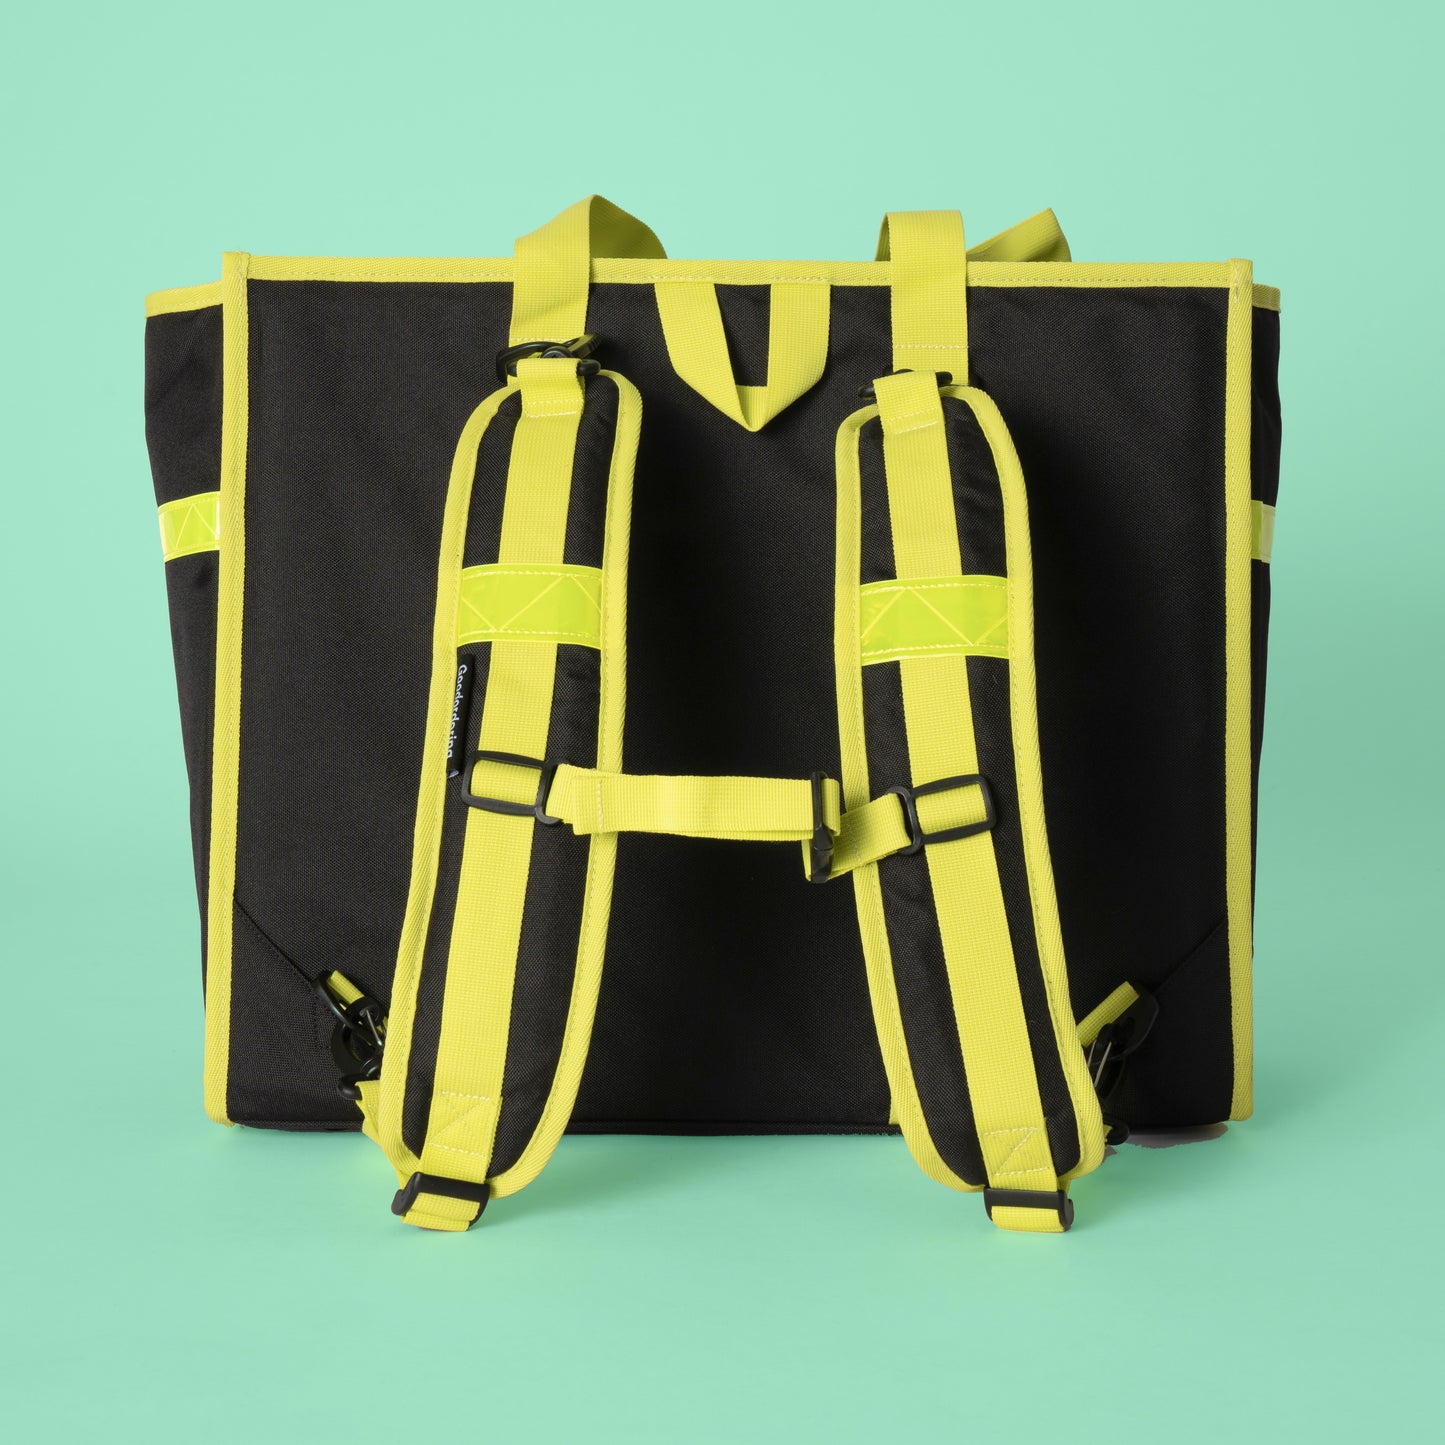 Neon tote backpack pannier